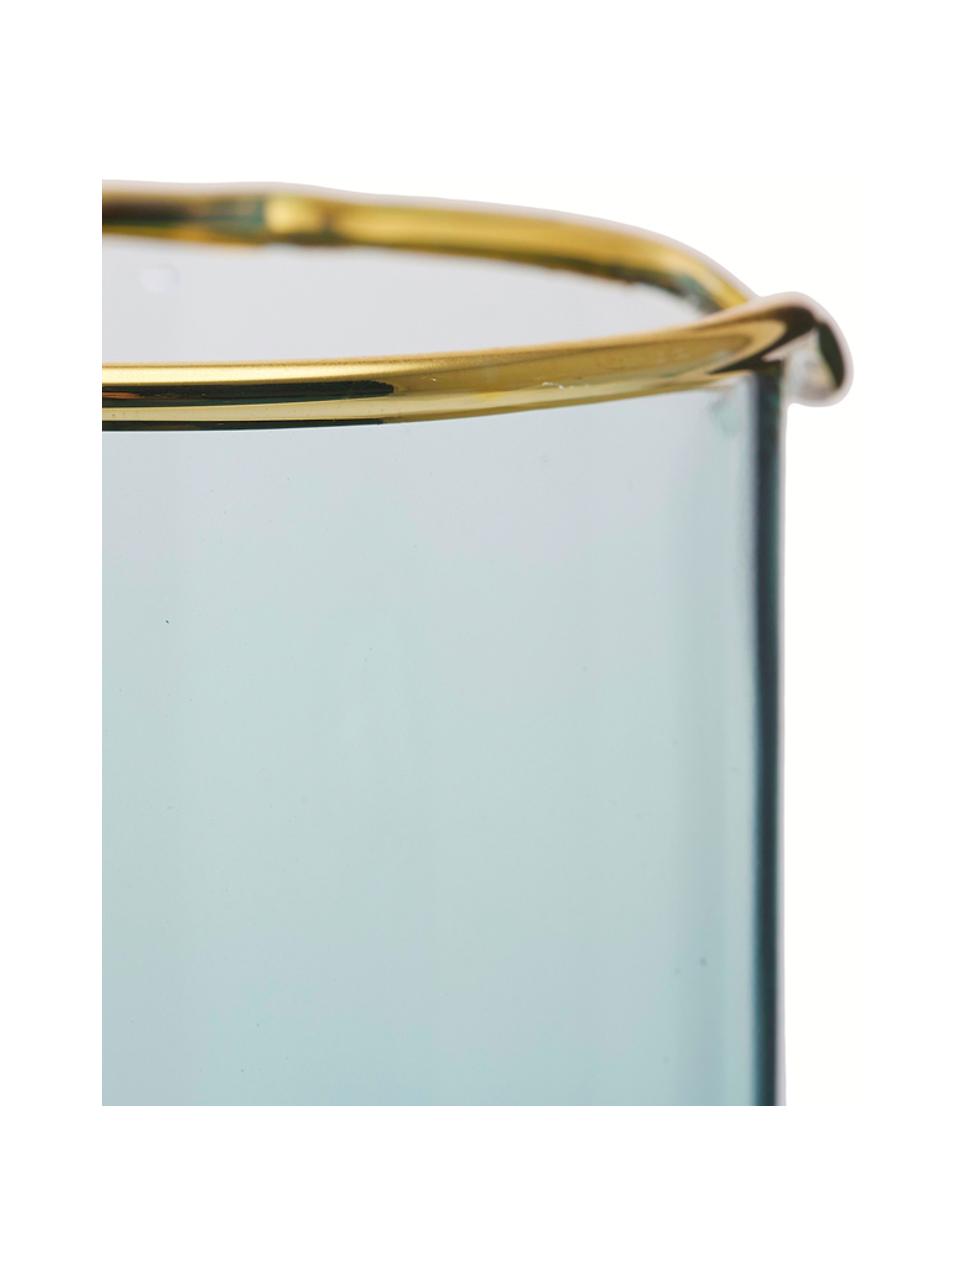 Krug Chloe in Blau mit Goldrand, 1.6 L, Glas, Hellblau, H 25 cm